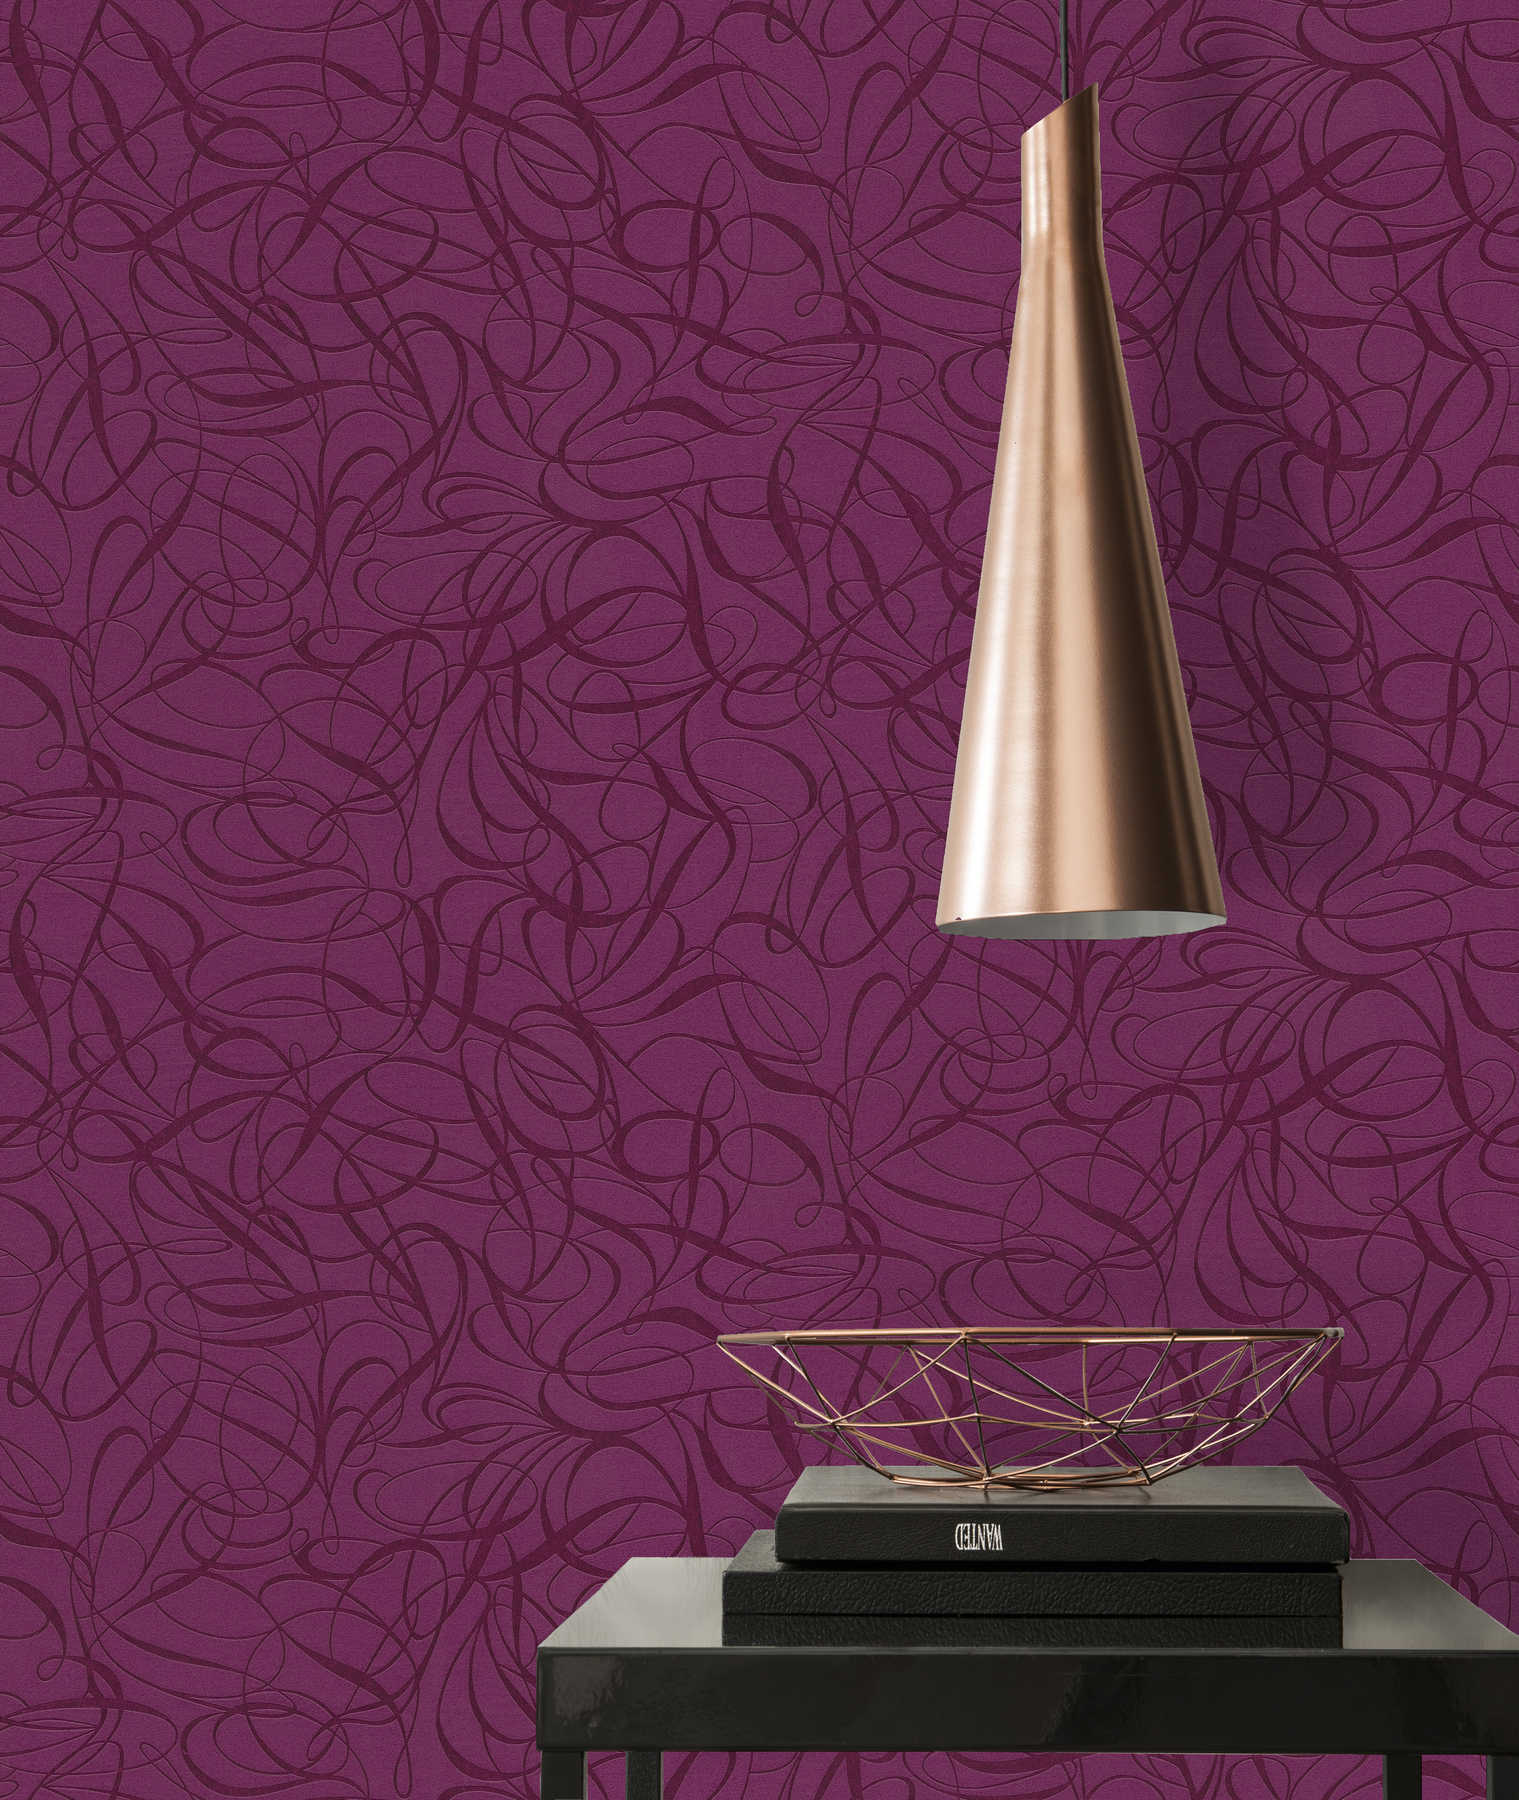             Wallpaper graphic line design and 3D effect - purple, metallic
        